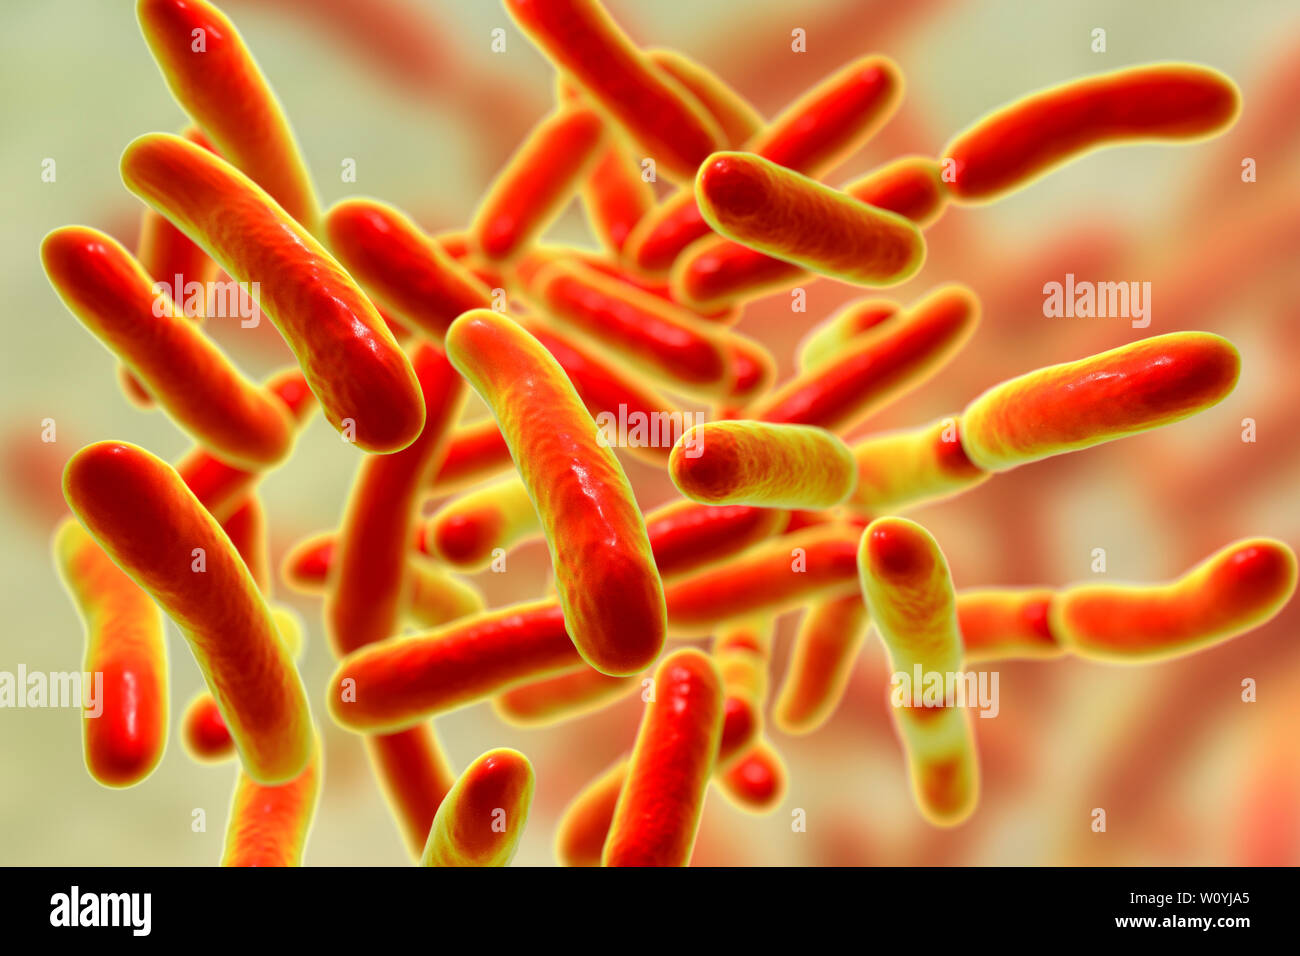 Faecalibacterium prausnitzii bacteria, illustration Stock Photo